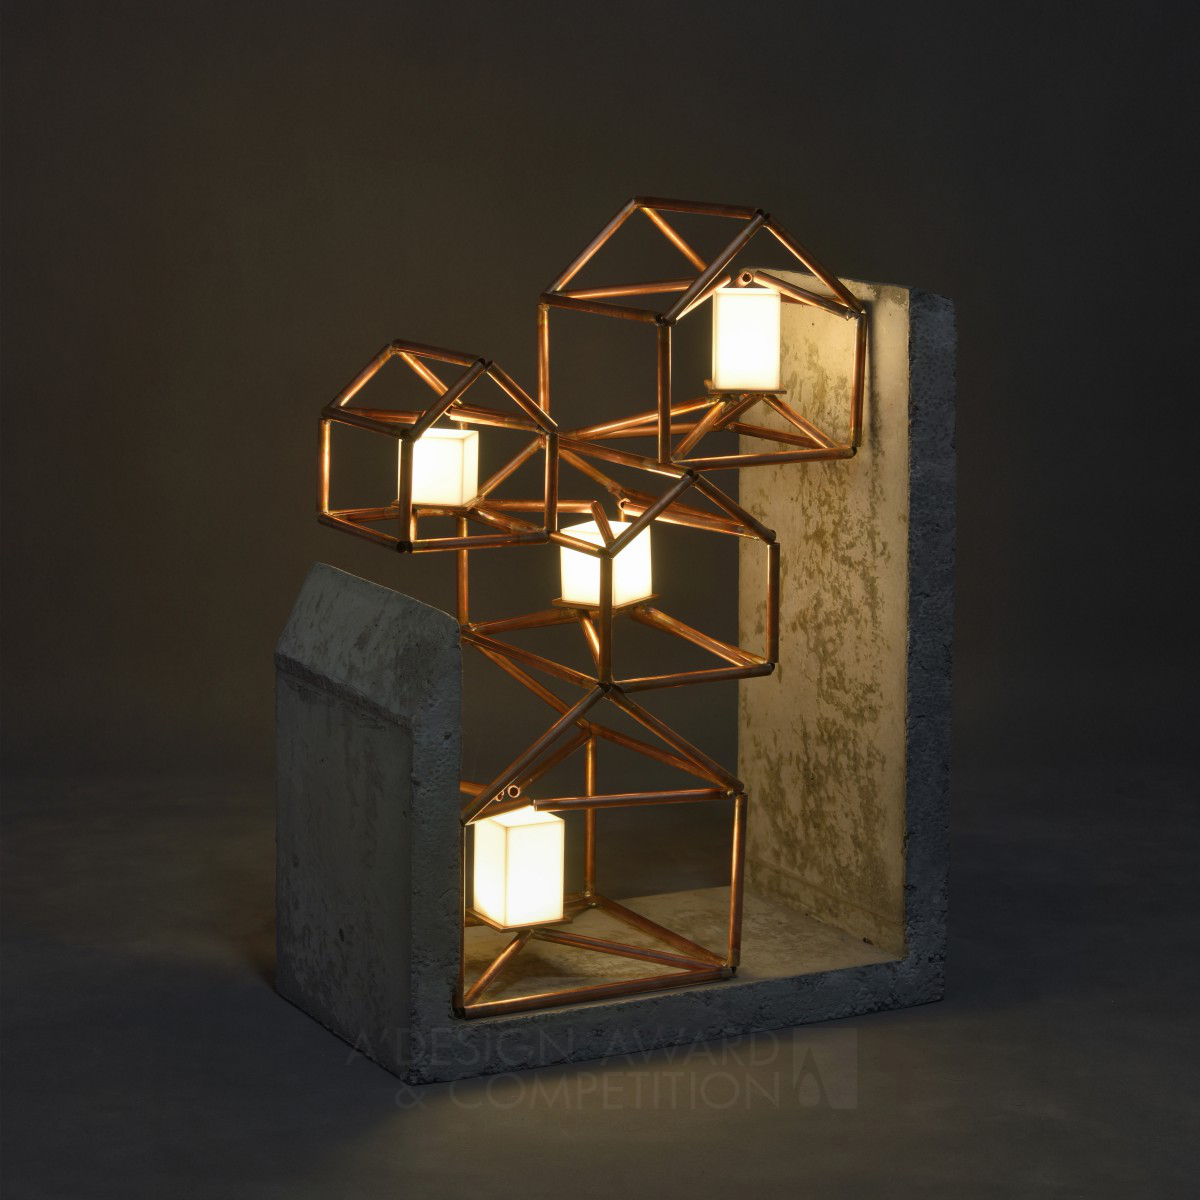 Nima Keivani&#039;s &quot;The Home&quot; Lamp